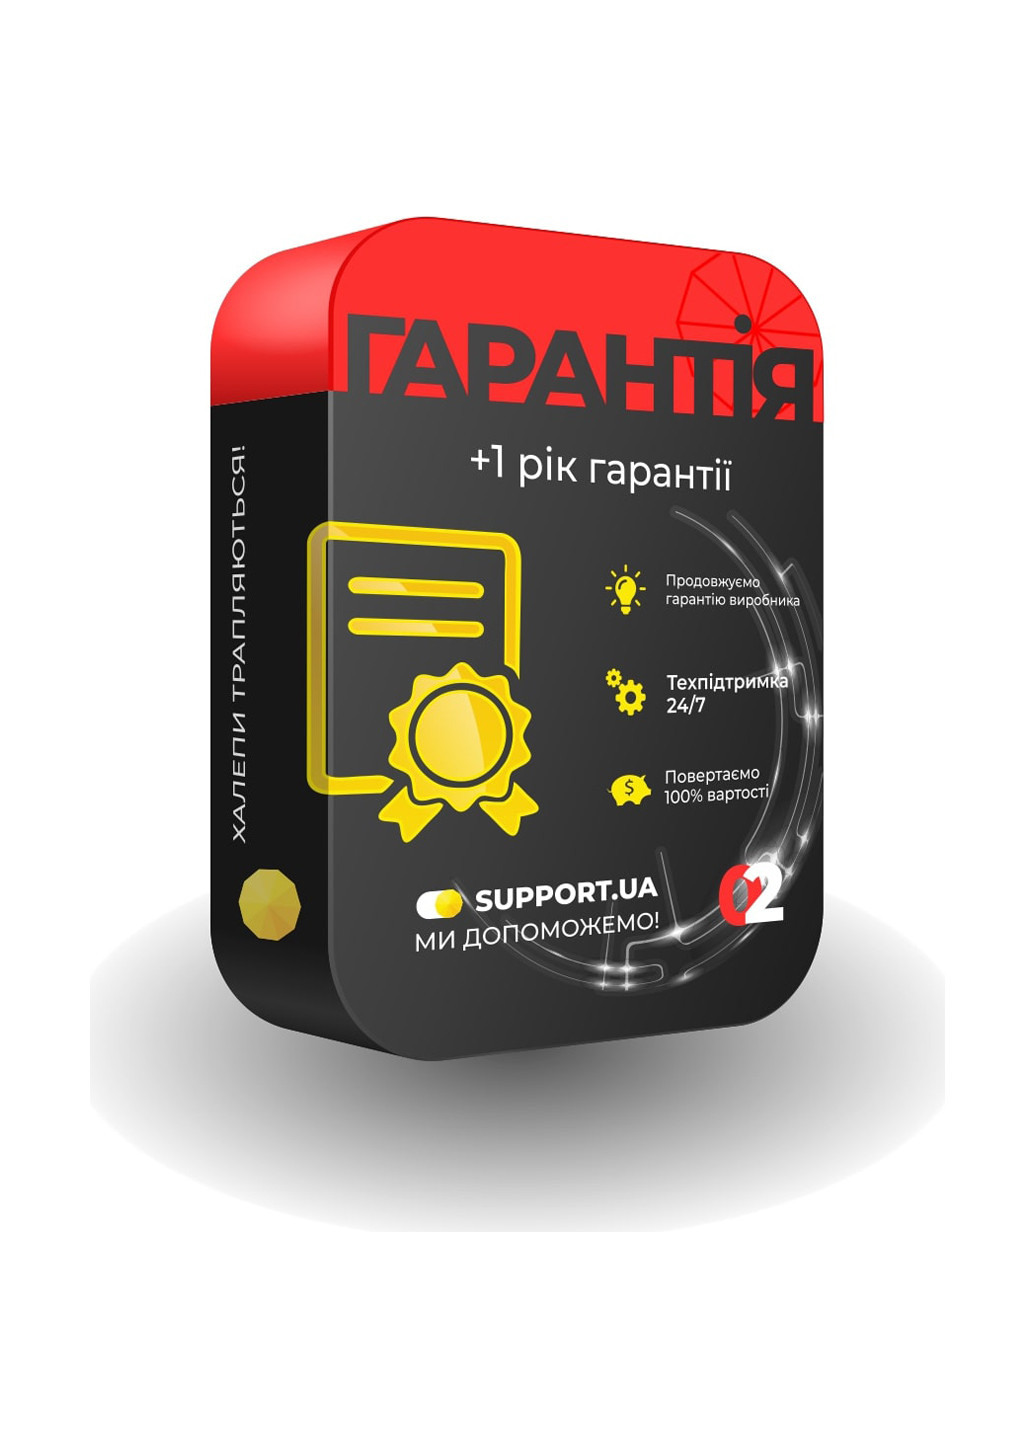 +1 год гарантии (4001-5000), Электронный сертификат от Support.ua